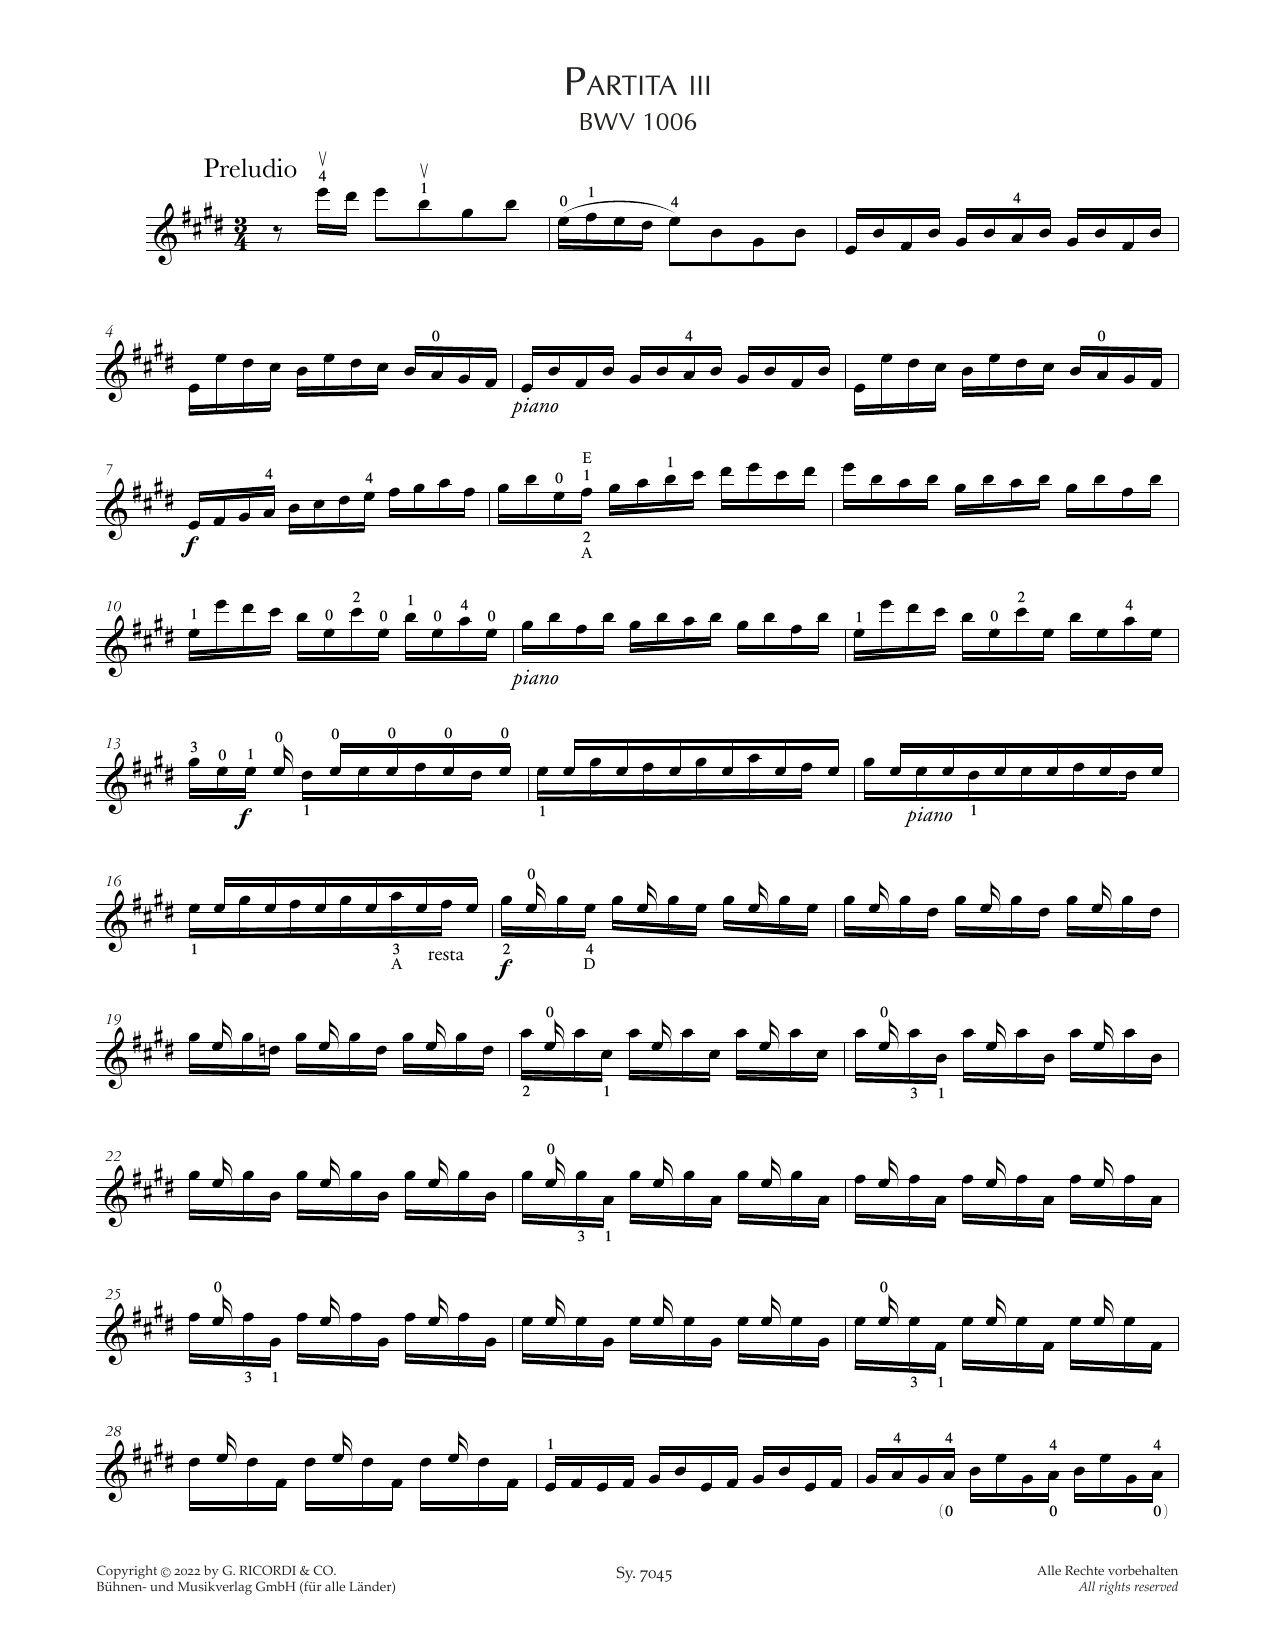 Johann Sebastian Bach Partita III, BWV 1006 Sheet Music Notes & Chords for Violin Solo - Download or Print PDF